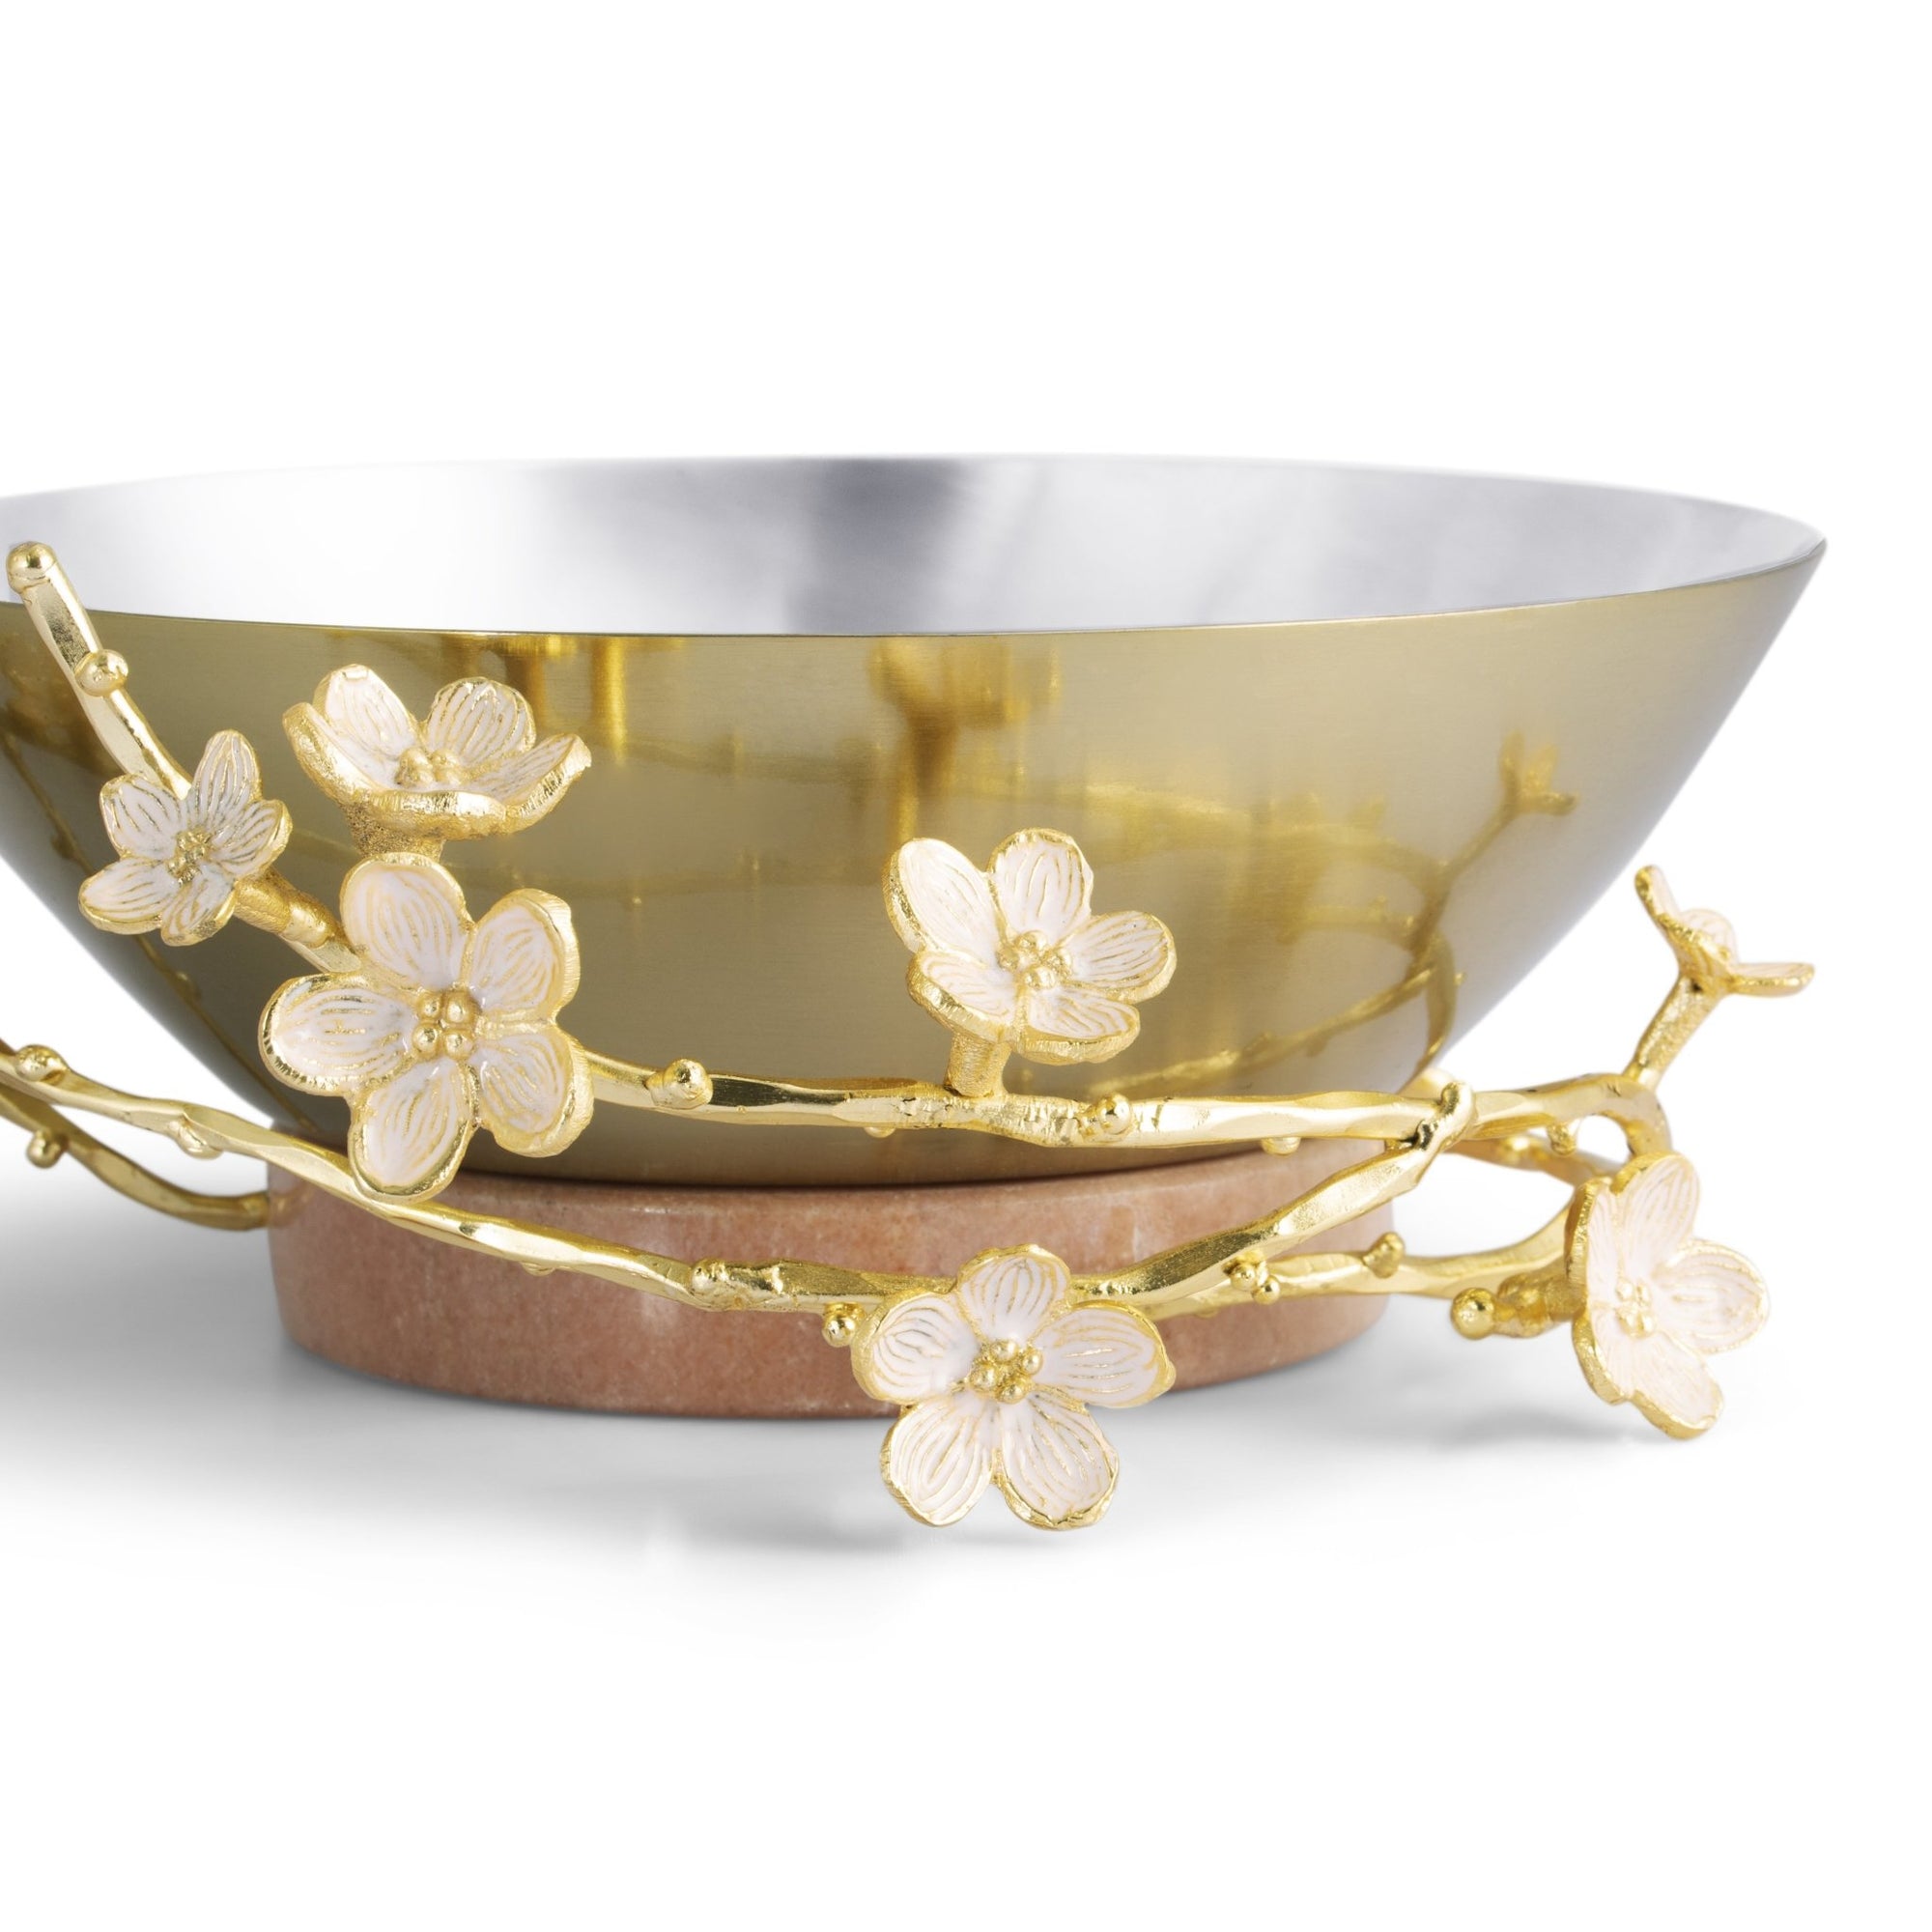 Michael Aram Cherry Blossom Porcelain Serving Bowl